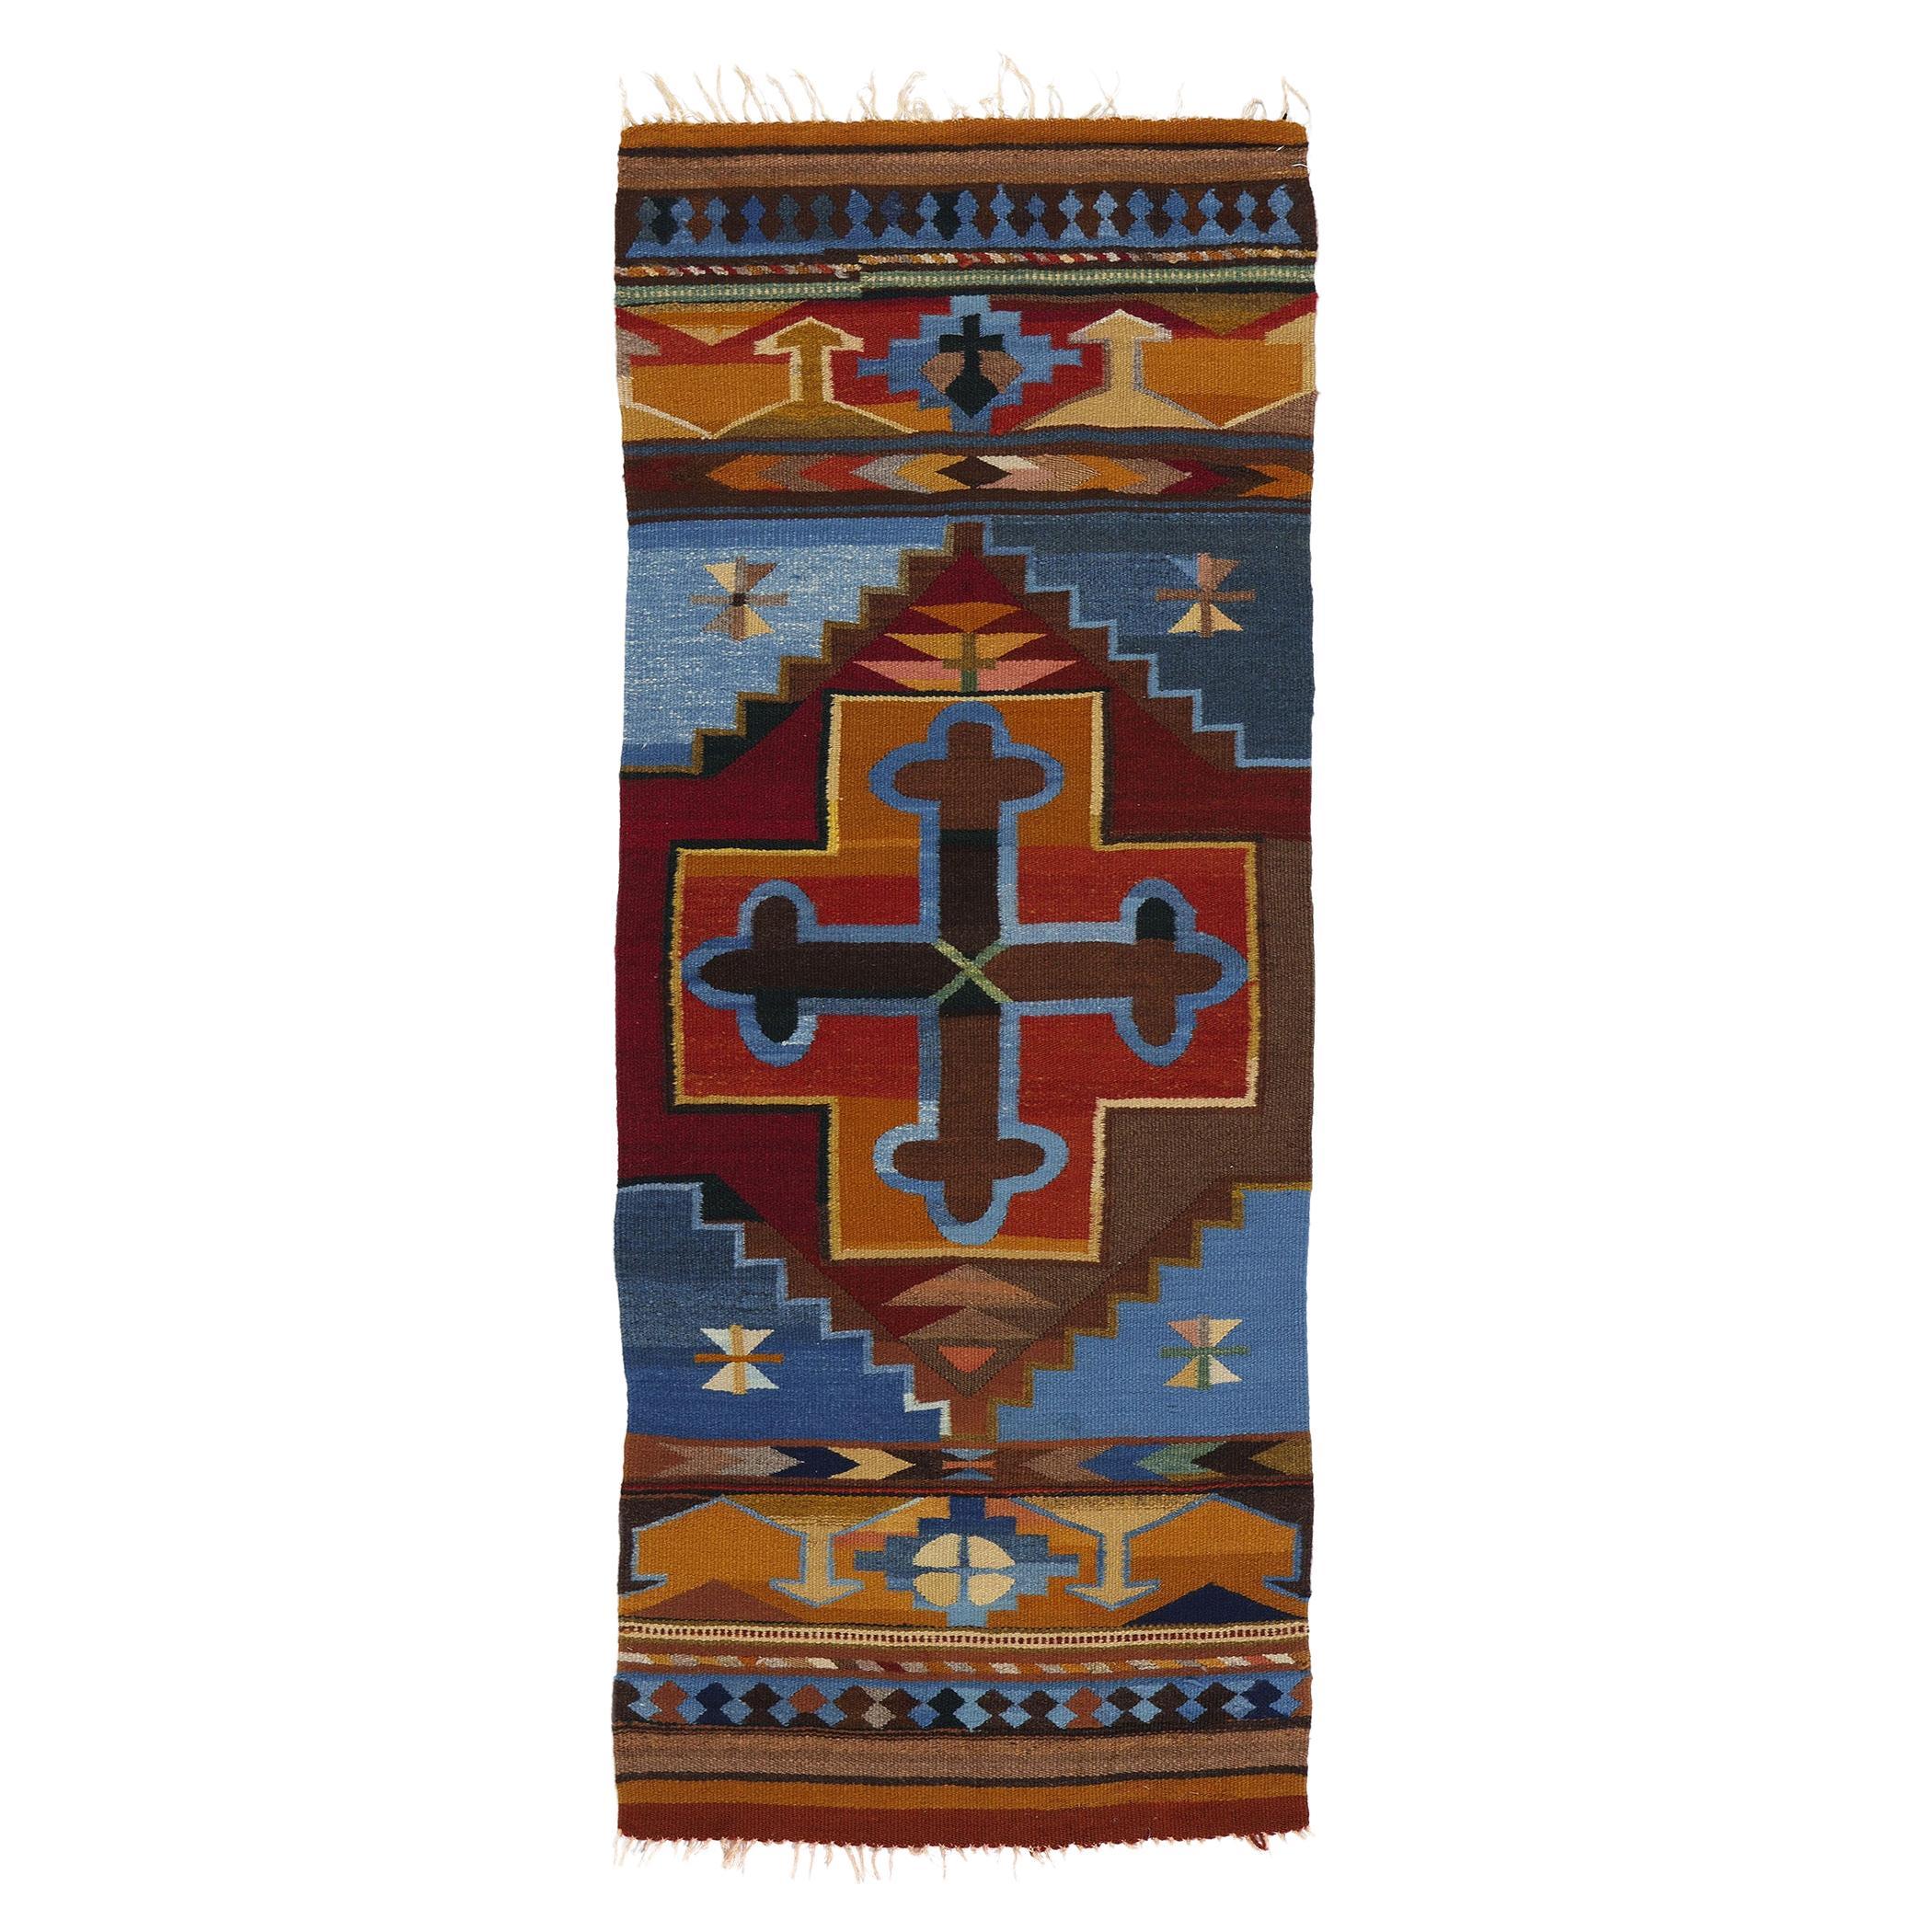  Vintage Turkish Kilim Rug, Colorful Bohemian Meets Tailor-Made Elegance